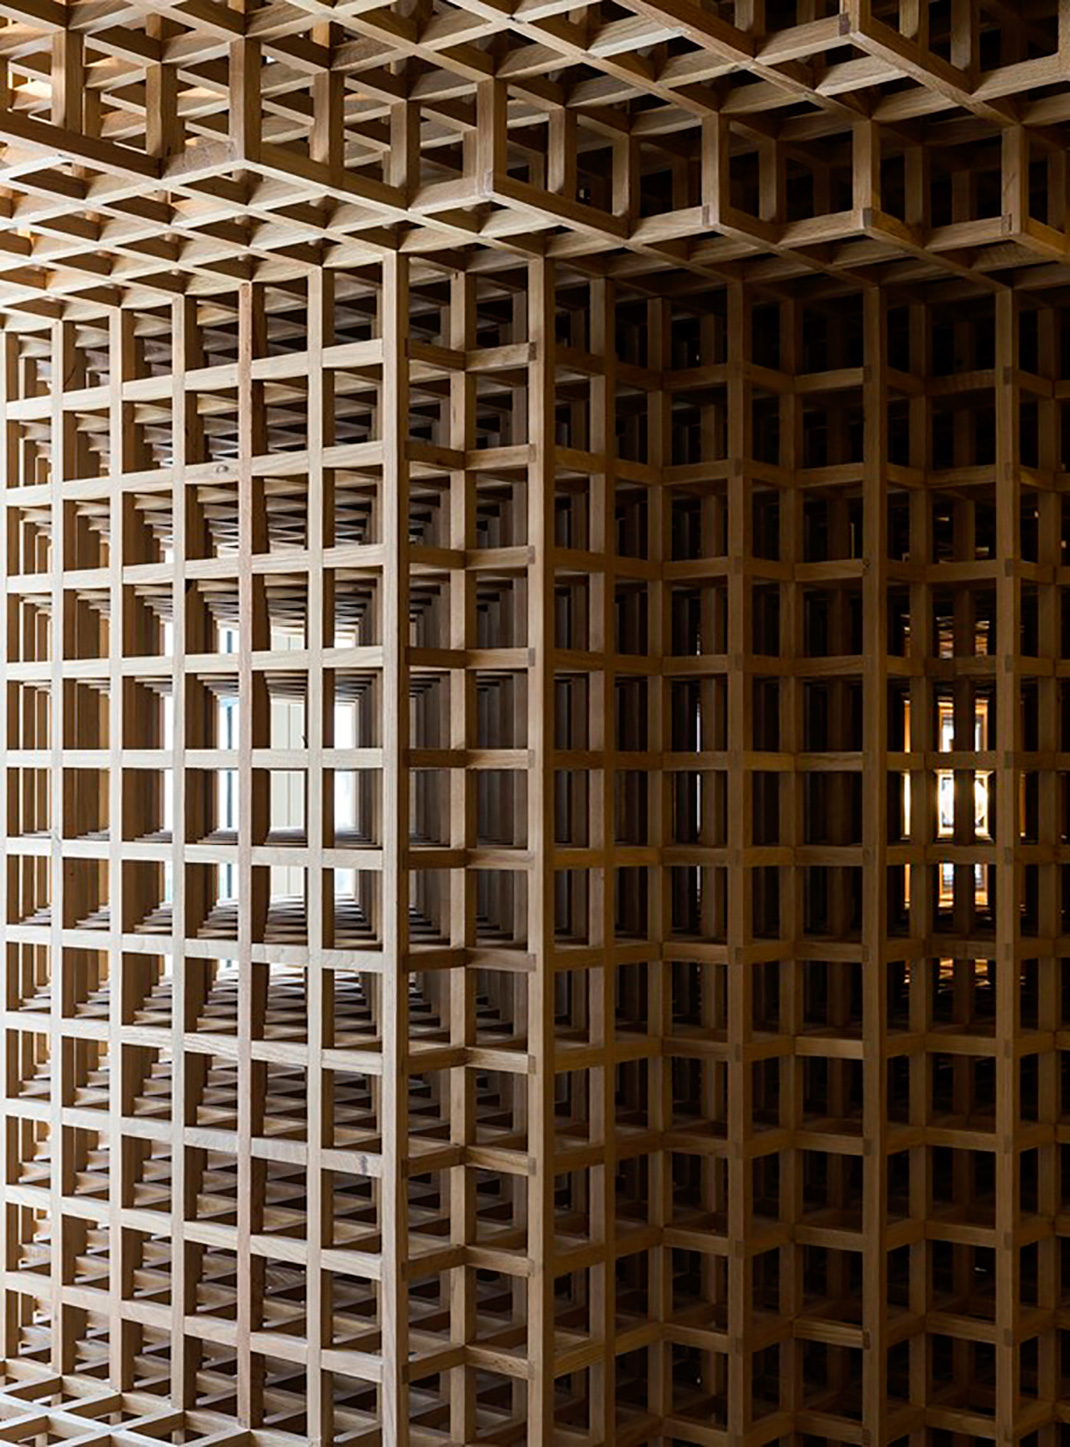 kosushi寿司餐厅 美国 寿司 日本料理 木结构 装置 阵列 餐厅LOGO VI设计 空间设计 视觉餐饮